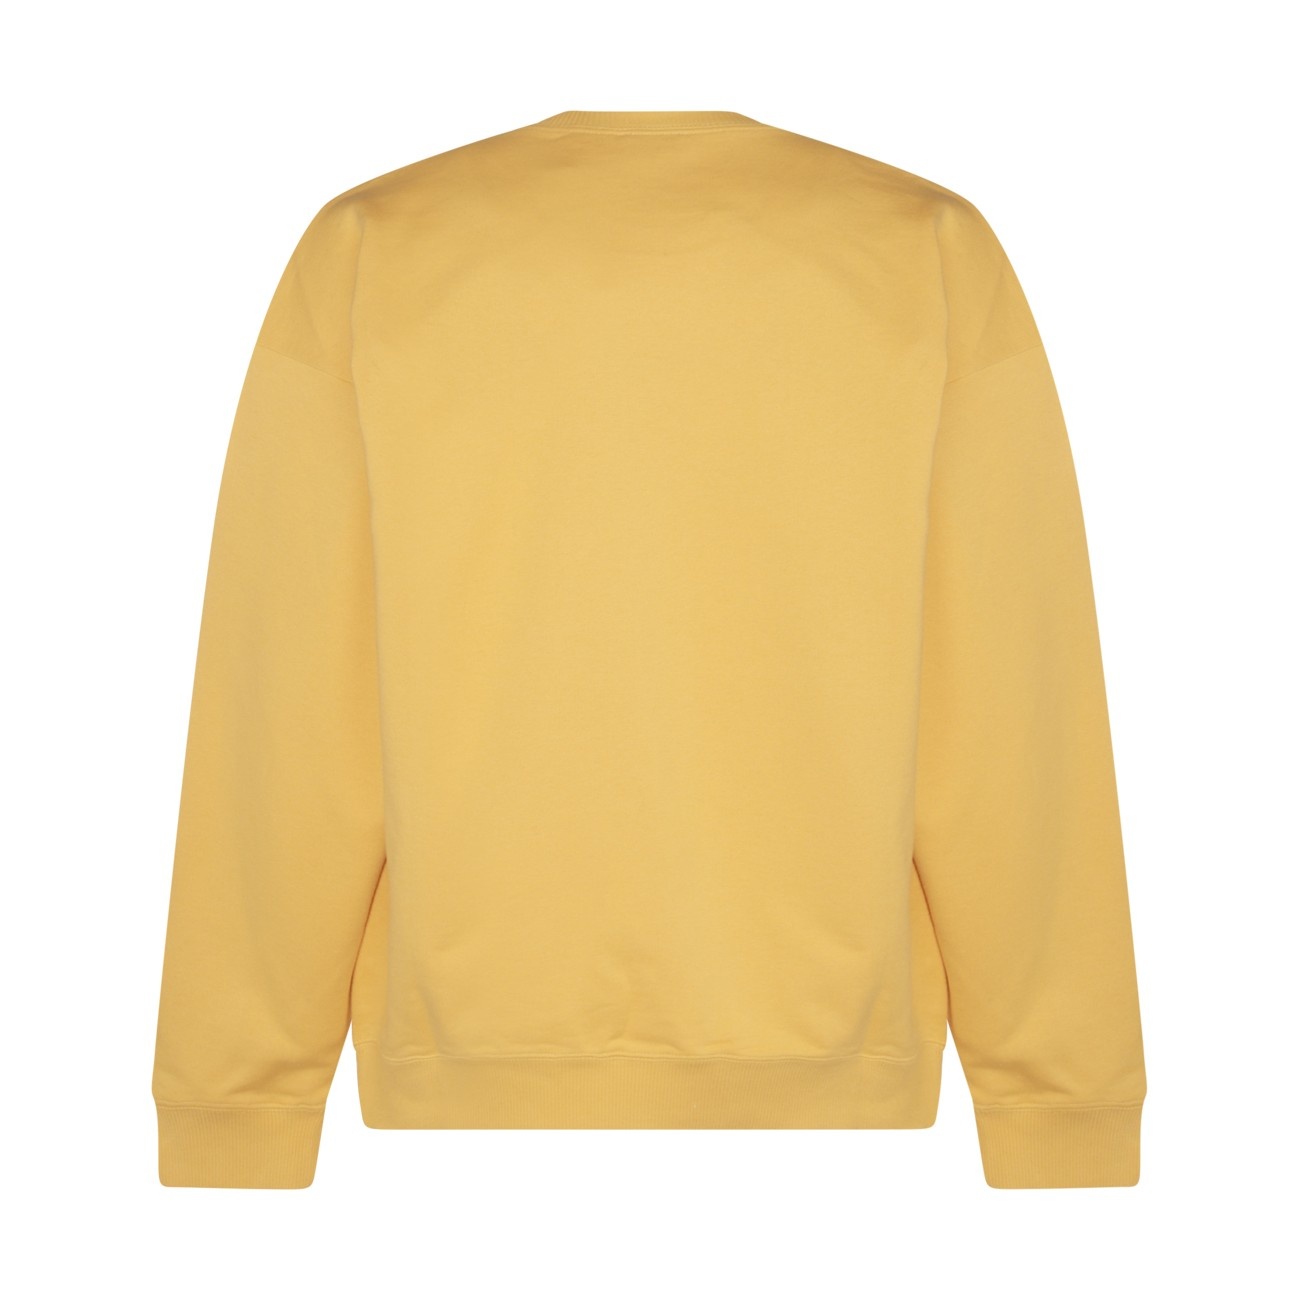 yellow cotton sweatshirt - 2